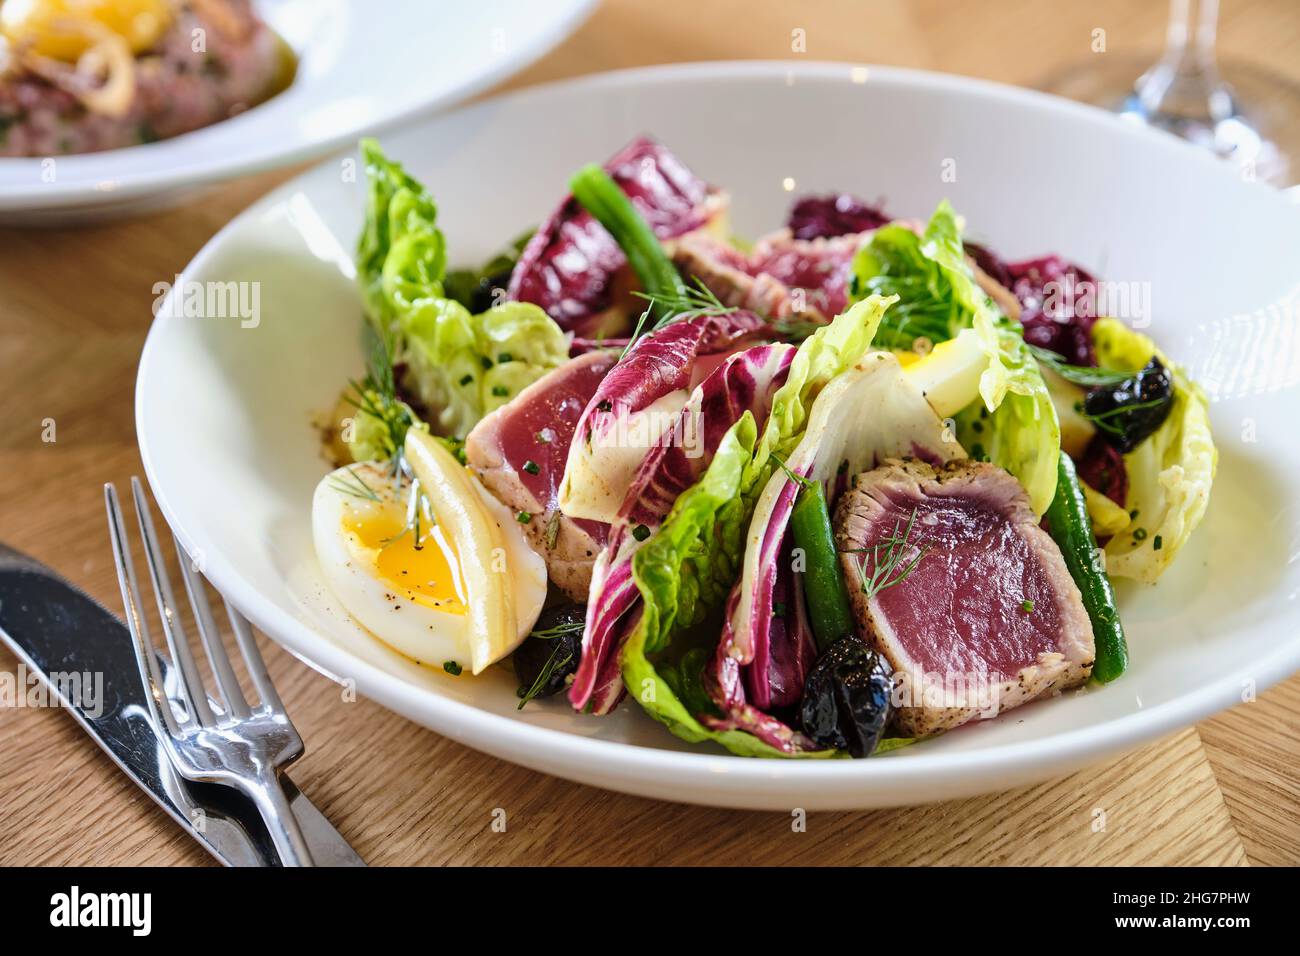 Seared ahi tuna salad with mixed greens and red wine. Stock Photo